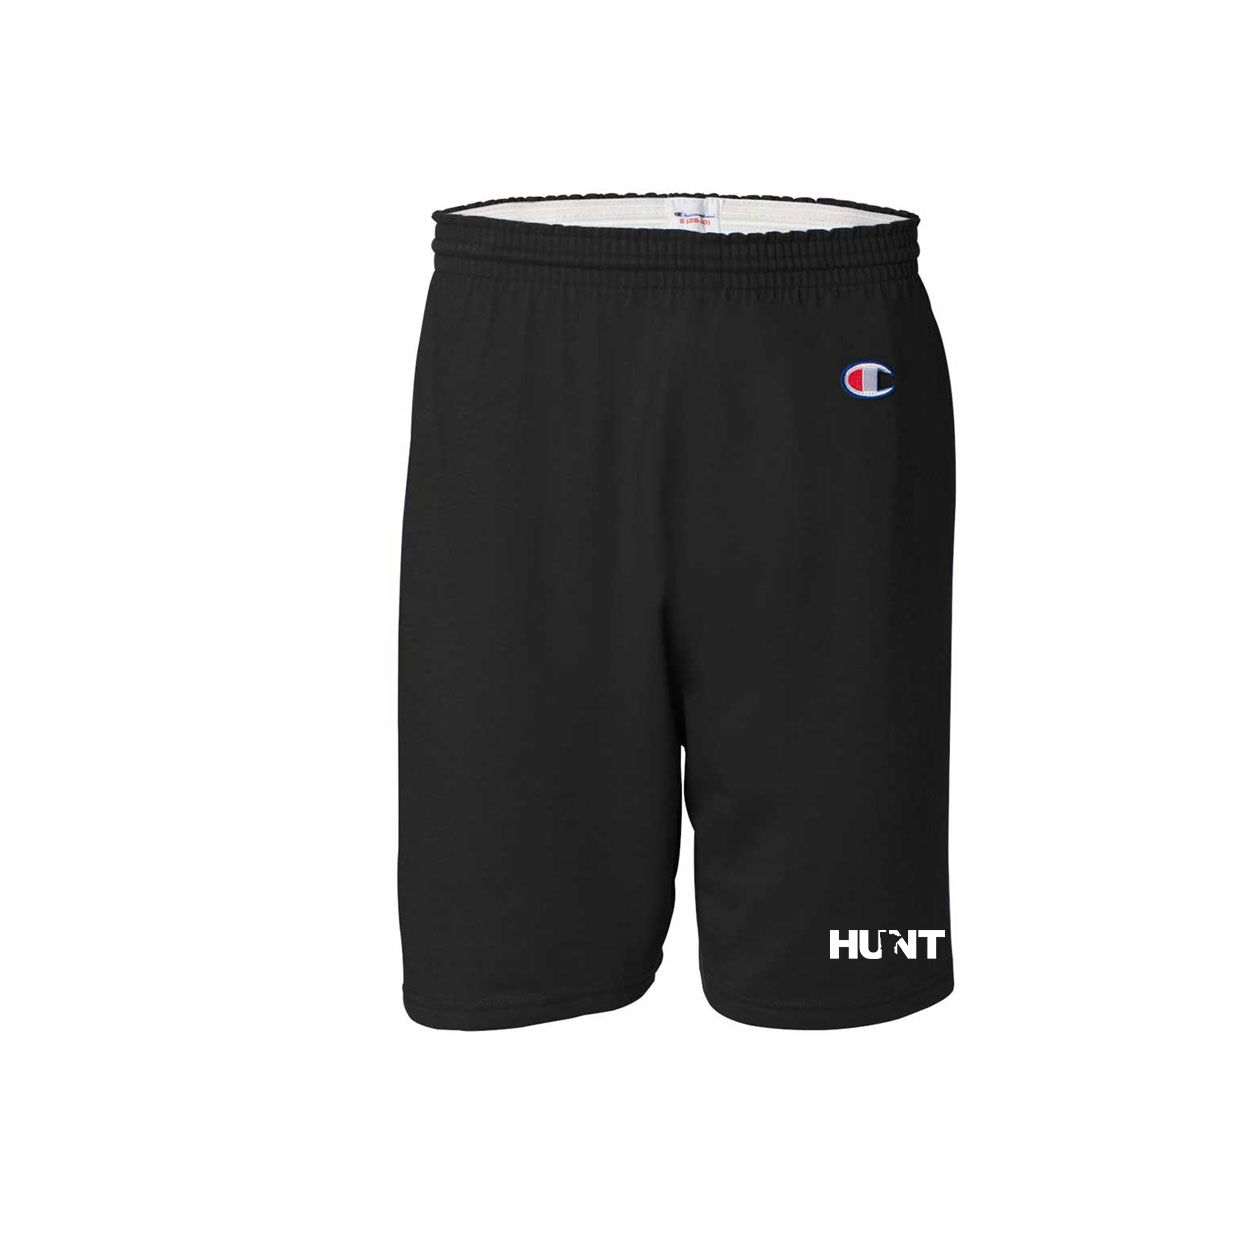 Hunt Minnesota Classic Men's Unisex Gym Shorts Black with Pockets Black (White Logo)